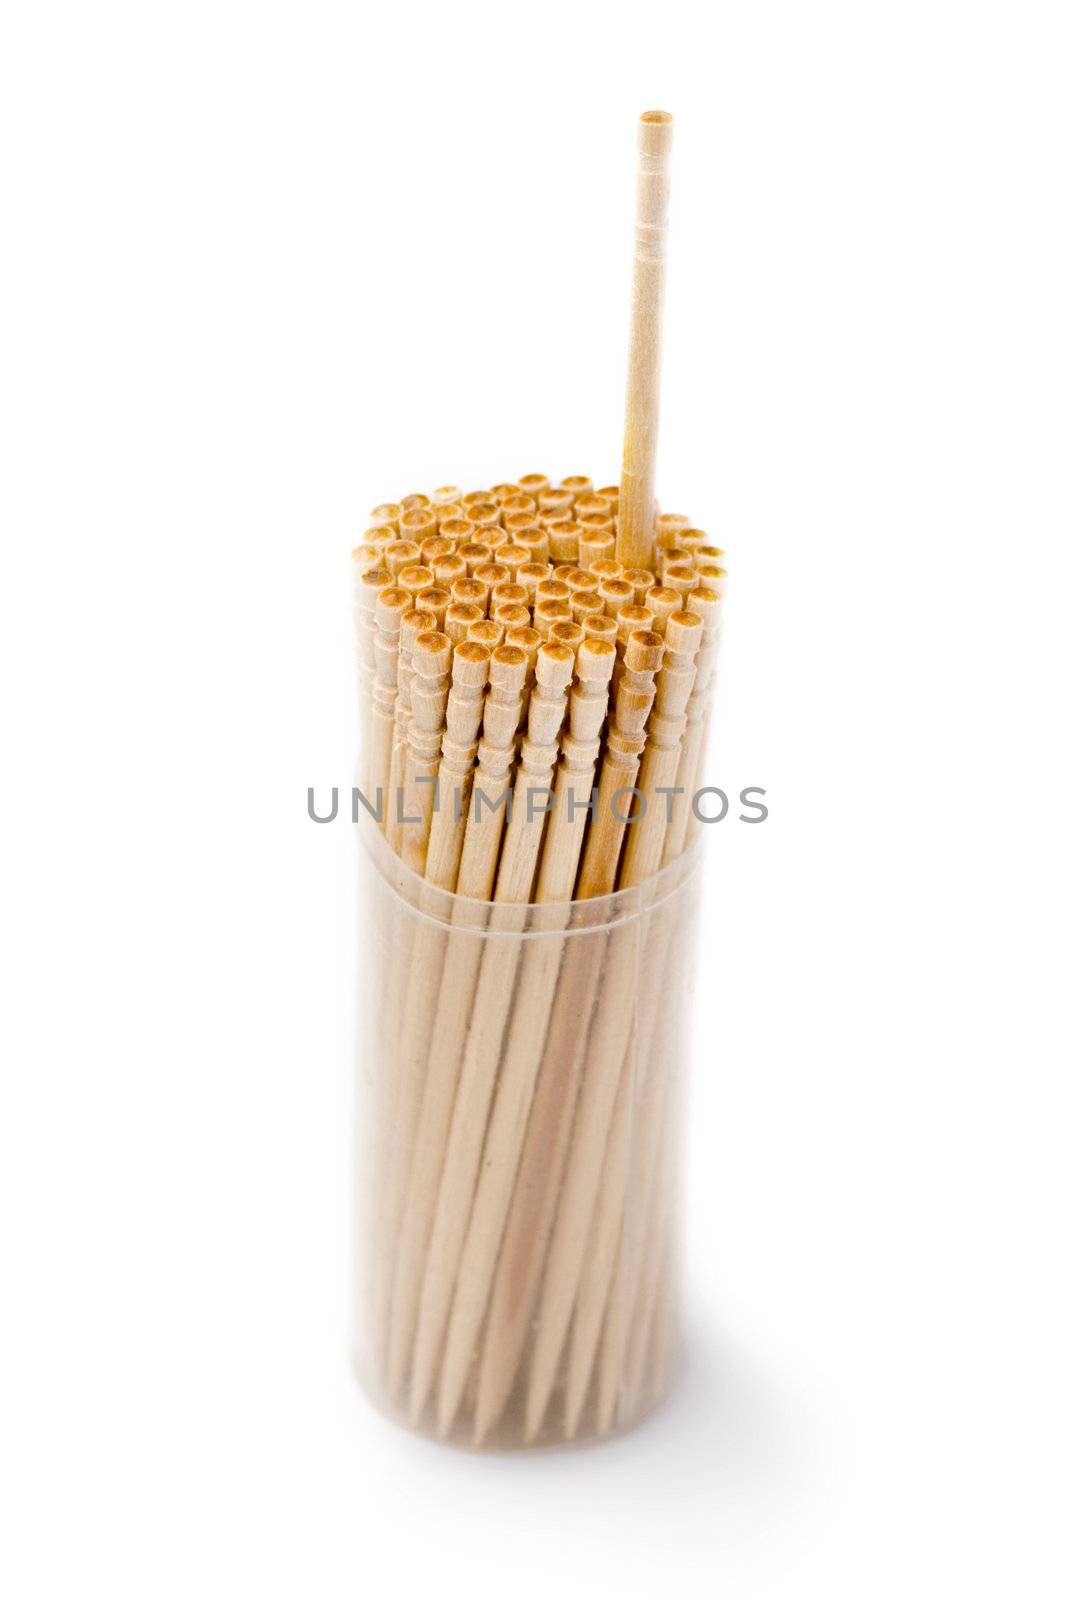 Toothpicks by Garsya